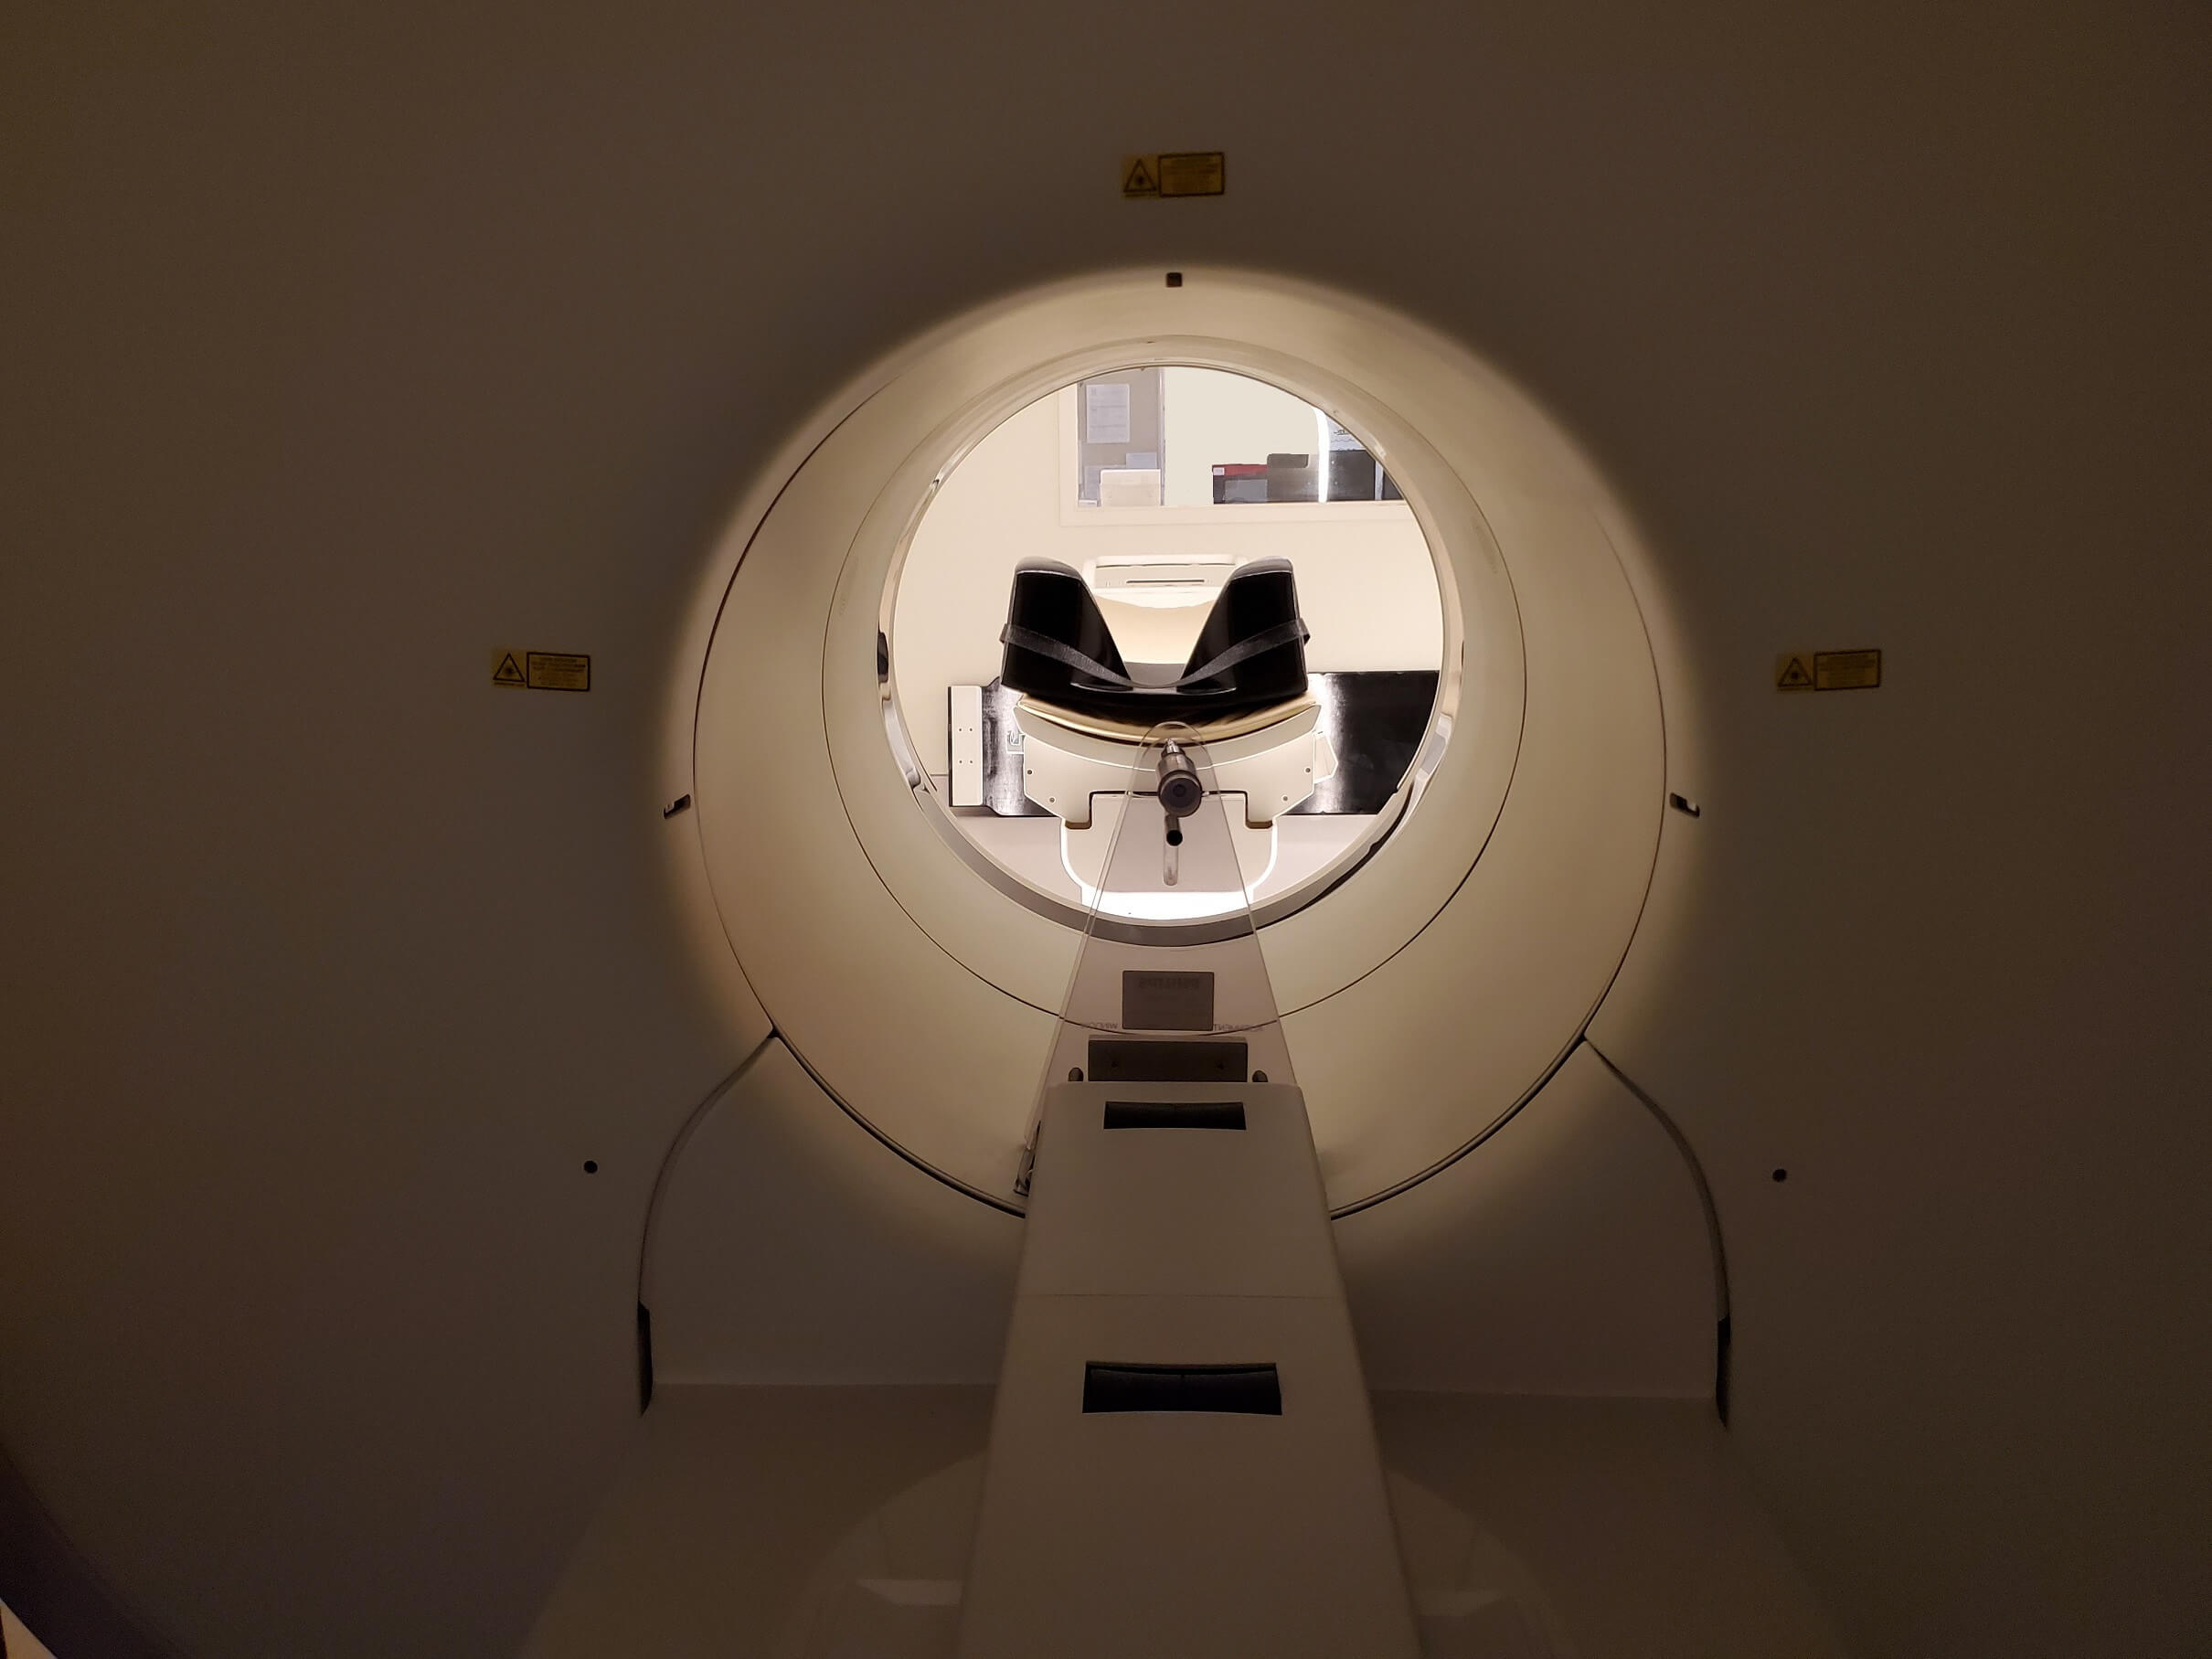 Philips Vereos digital PET/CT scanner interior